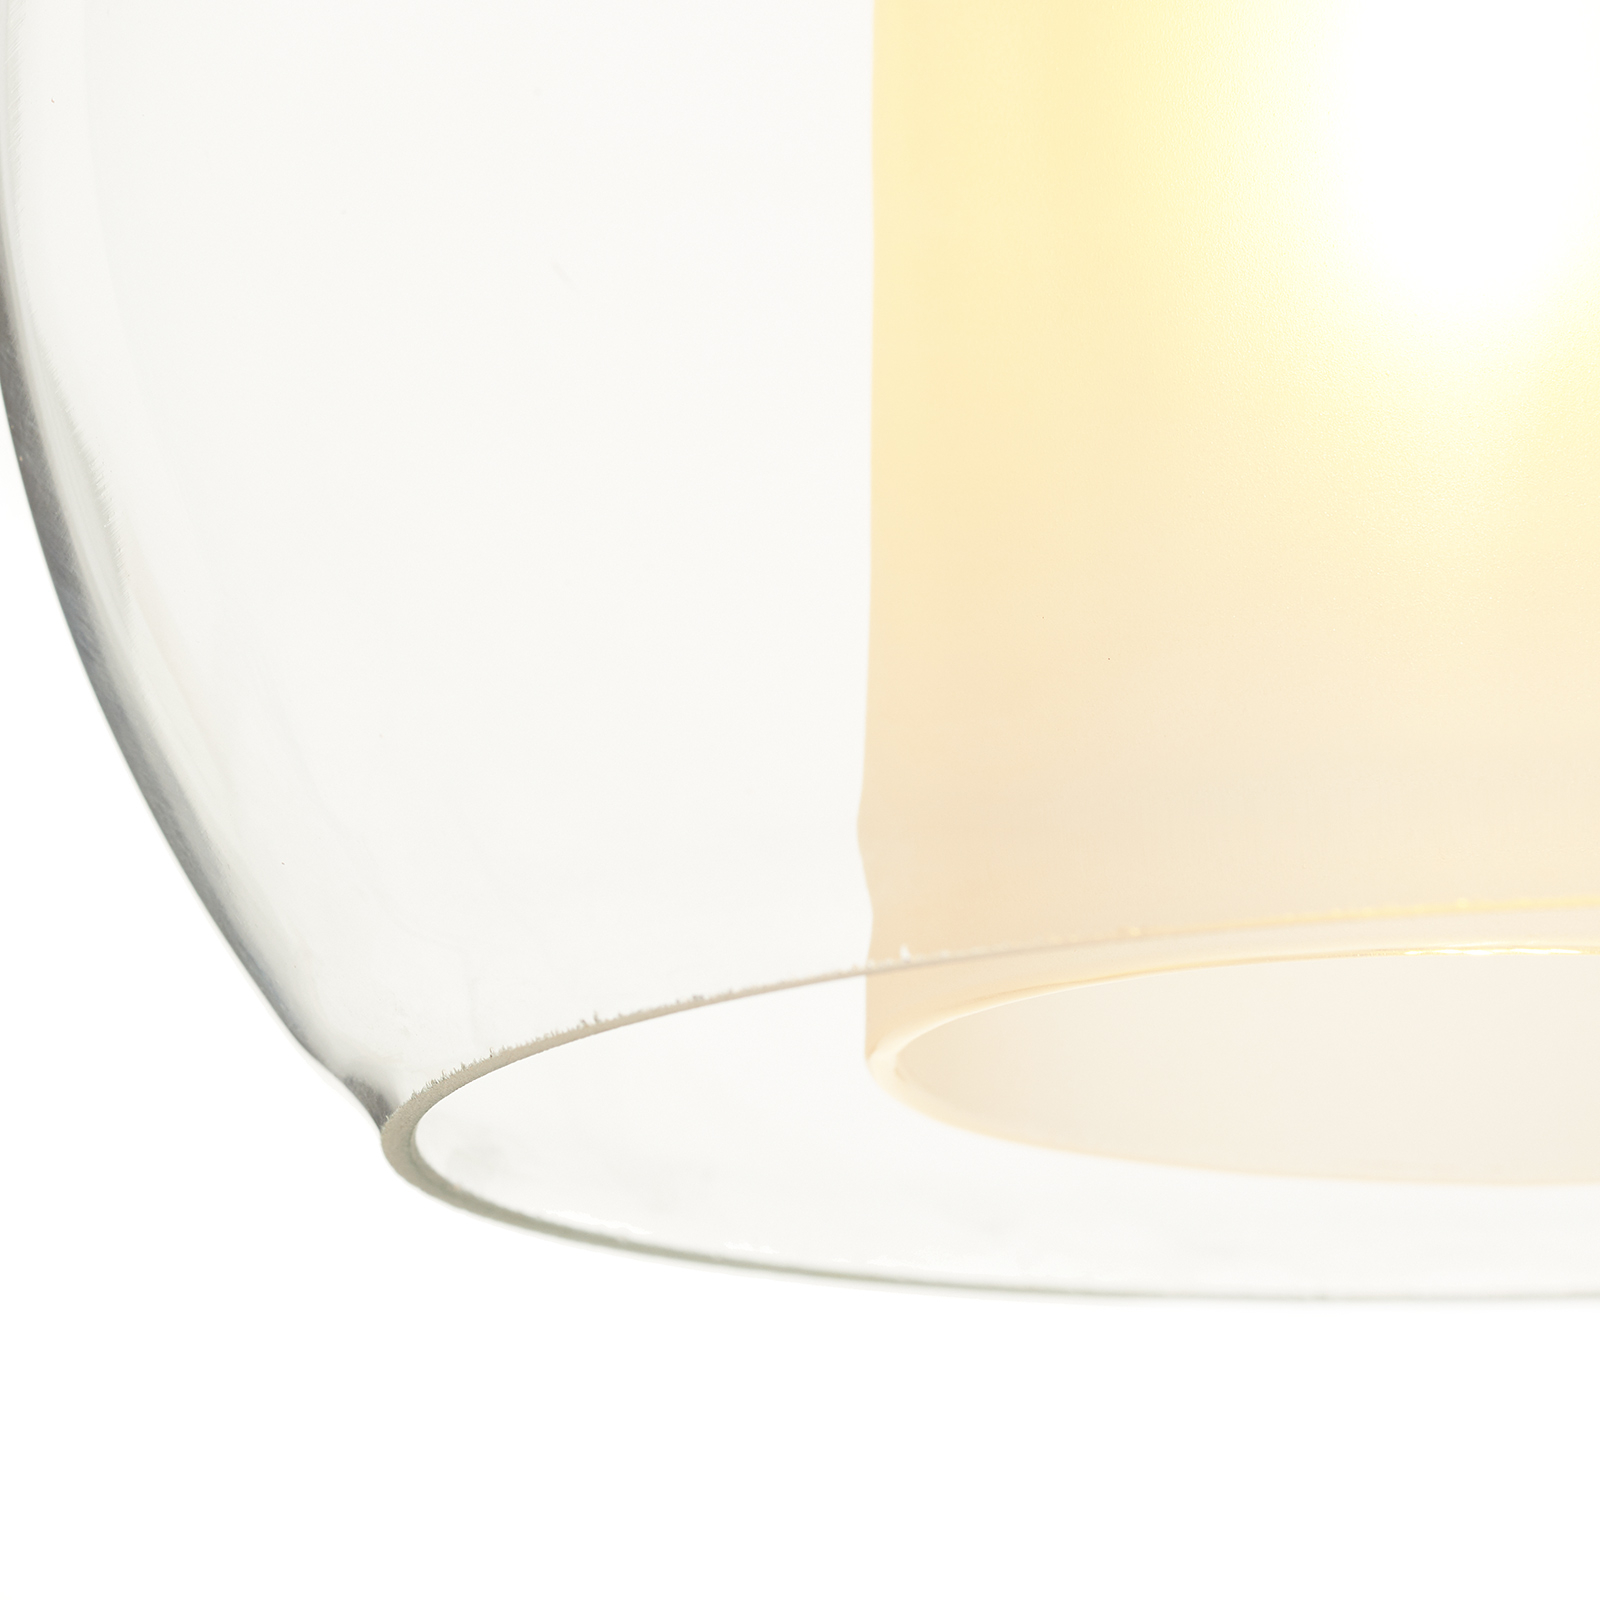 Classic Bolsano glass pendant light